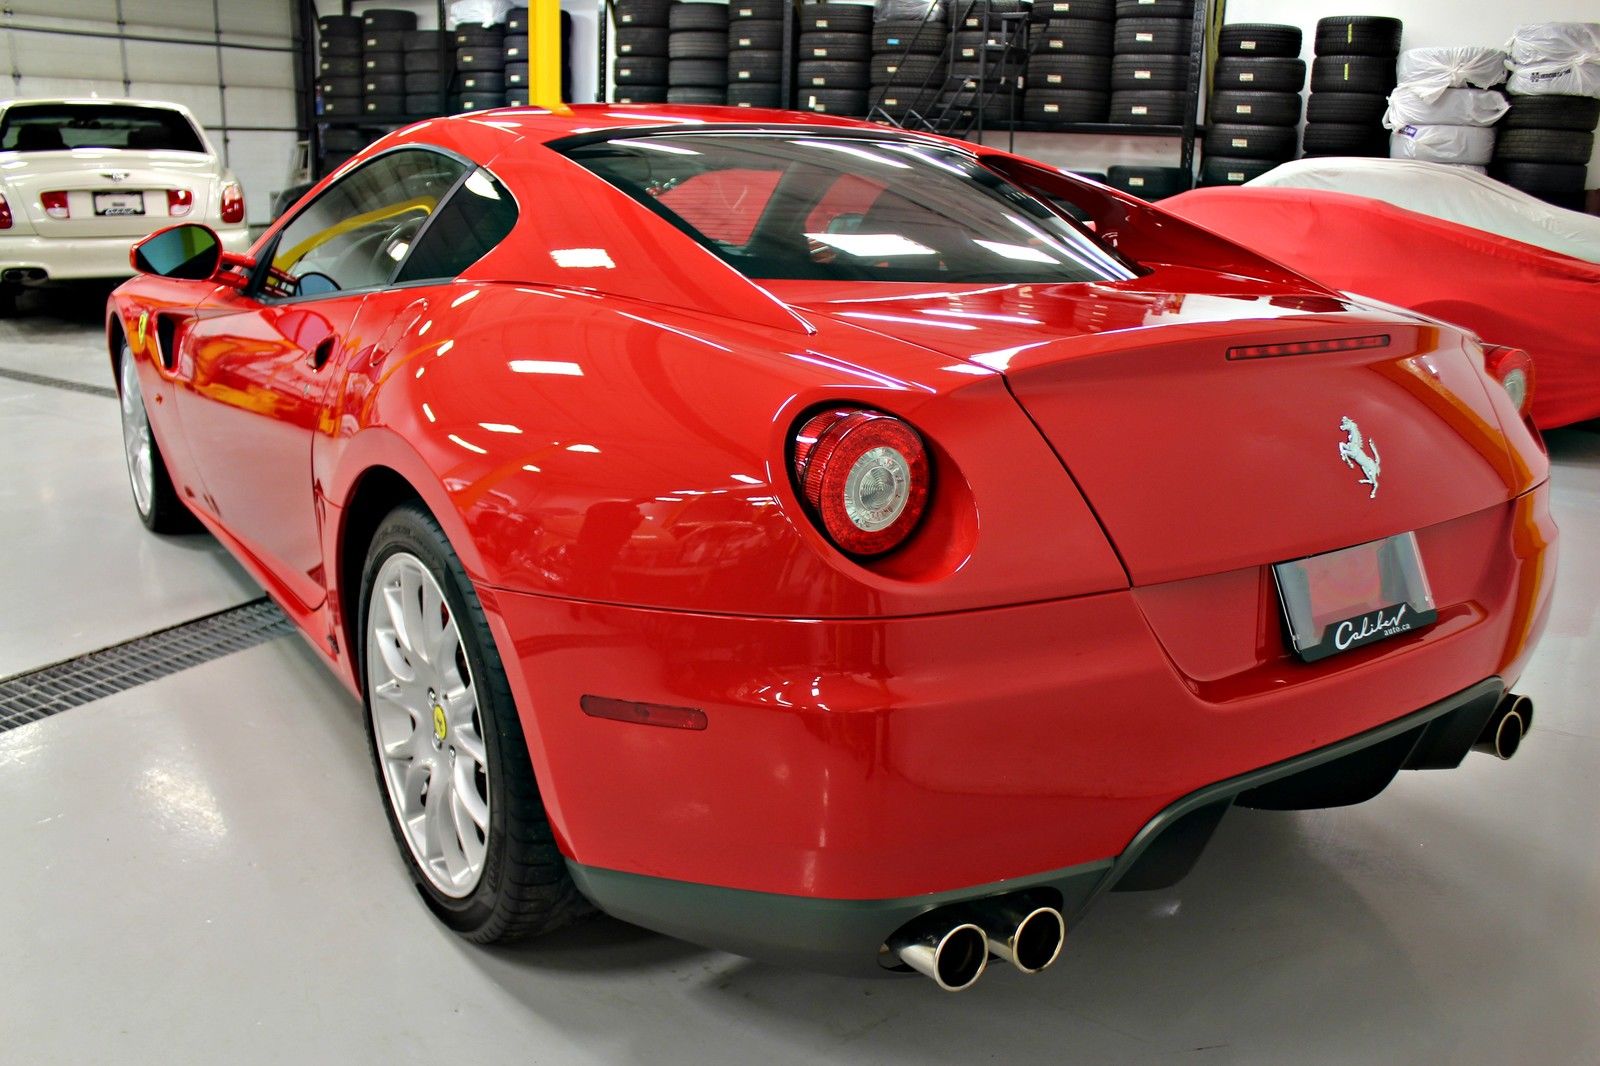 Rare Manual Ferrari 599 GTB Arrives On eBay | Carscoops